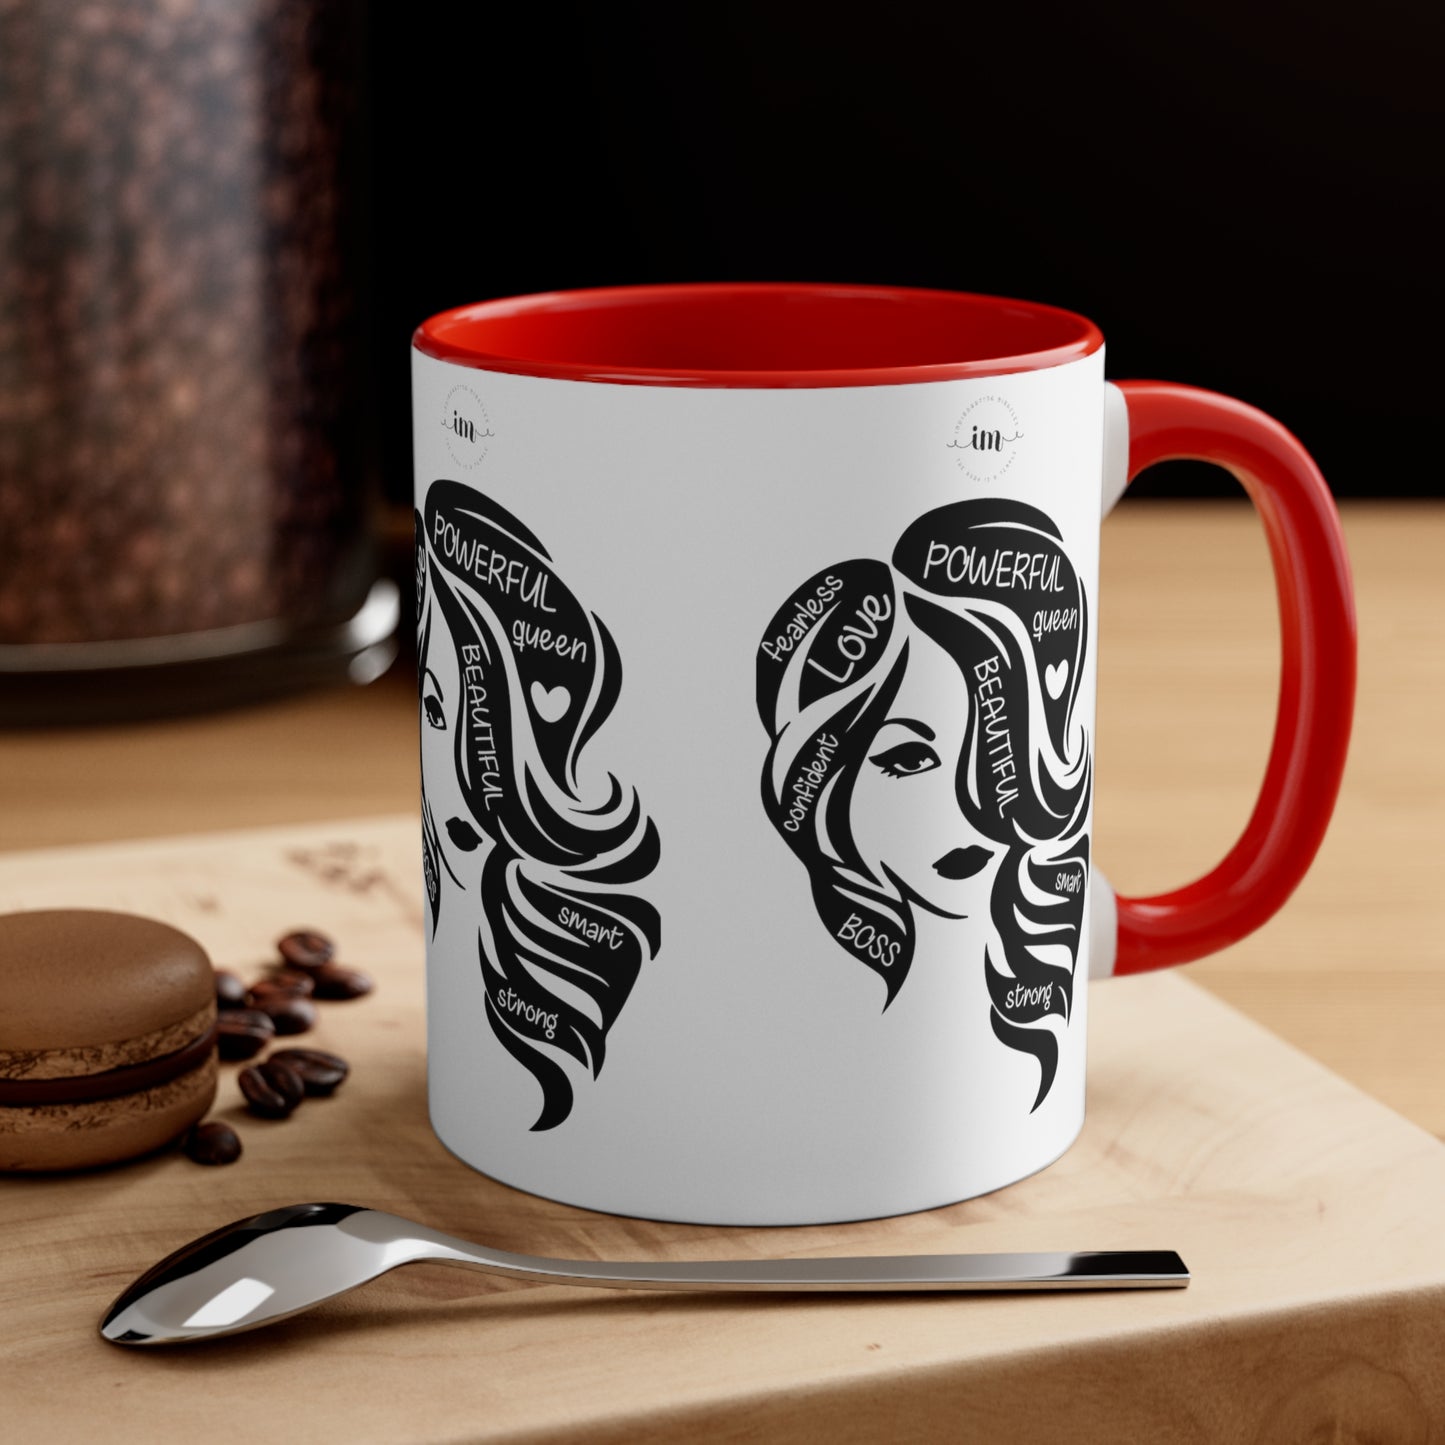 A self love journey tonic tea mug for sale